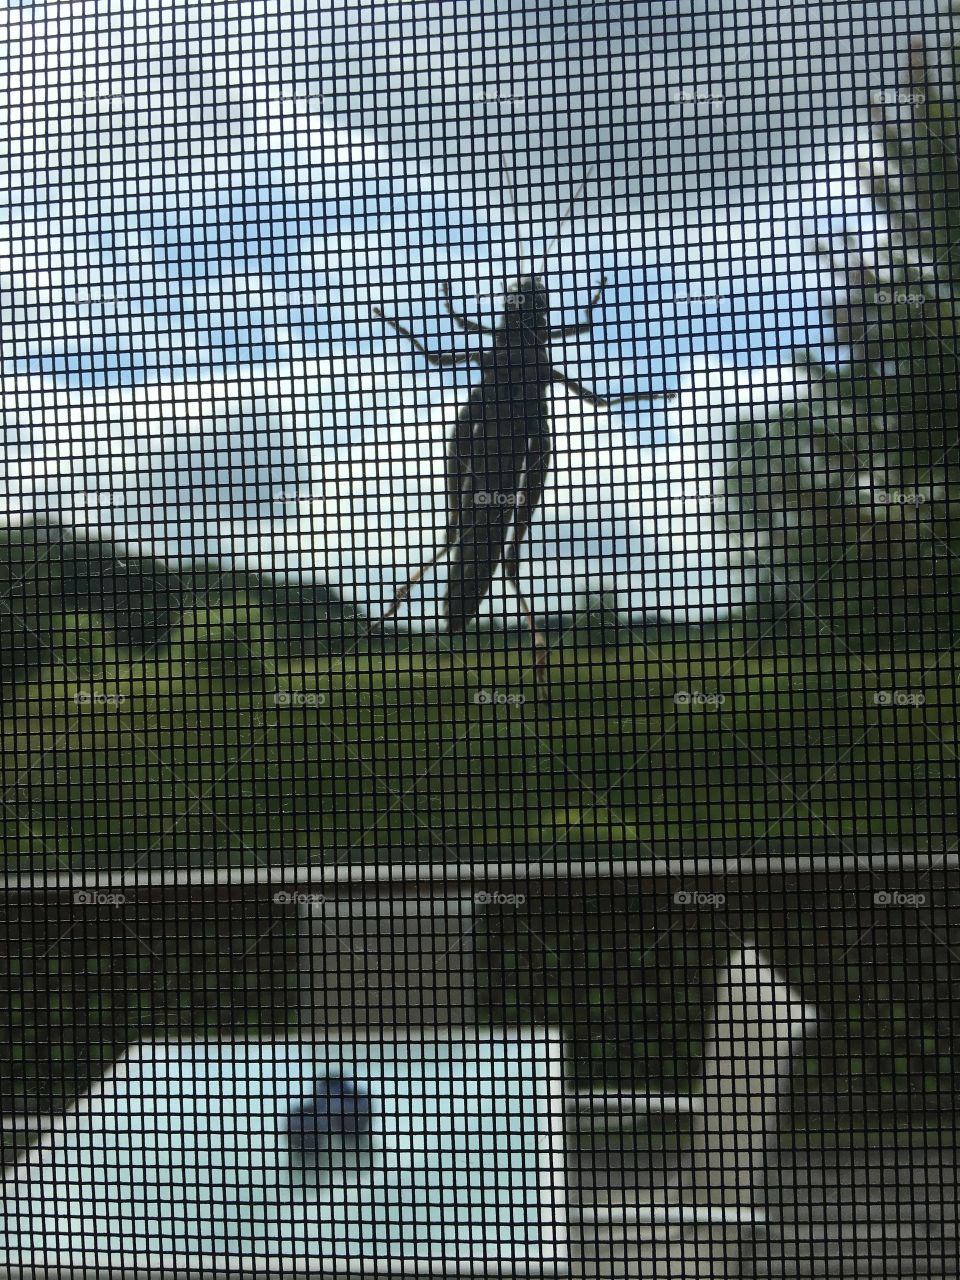 Grasshopper screen shadow.